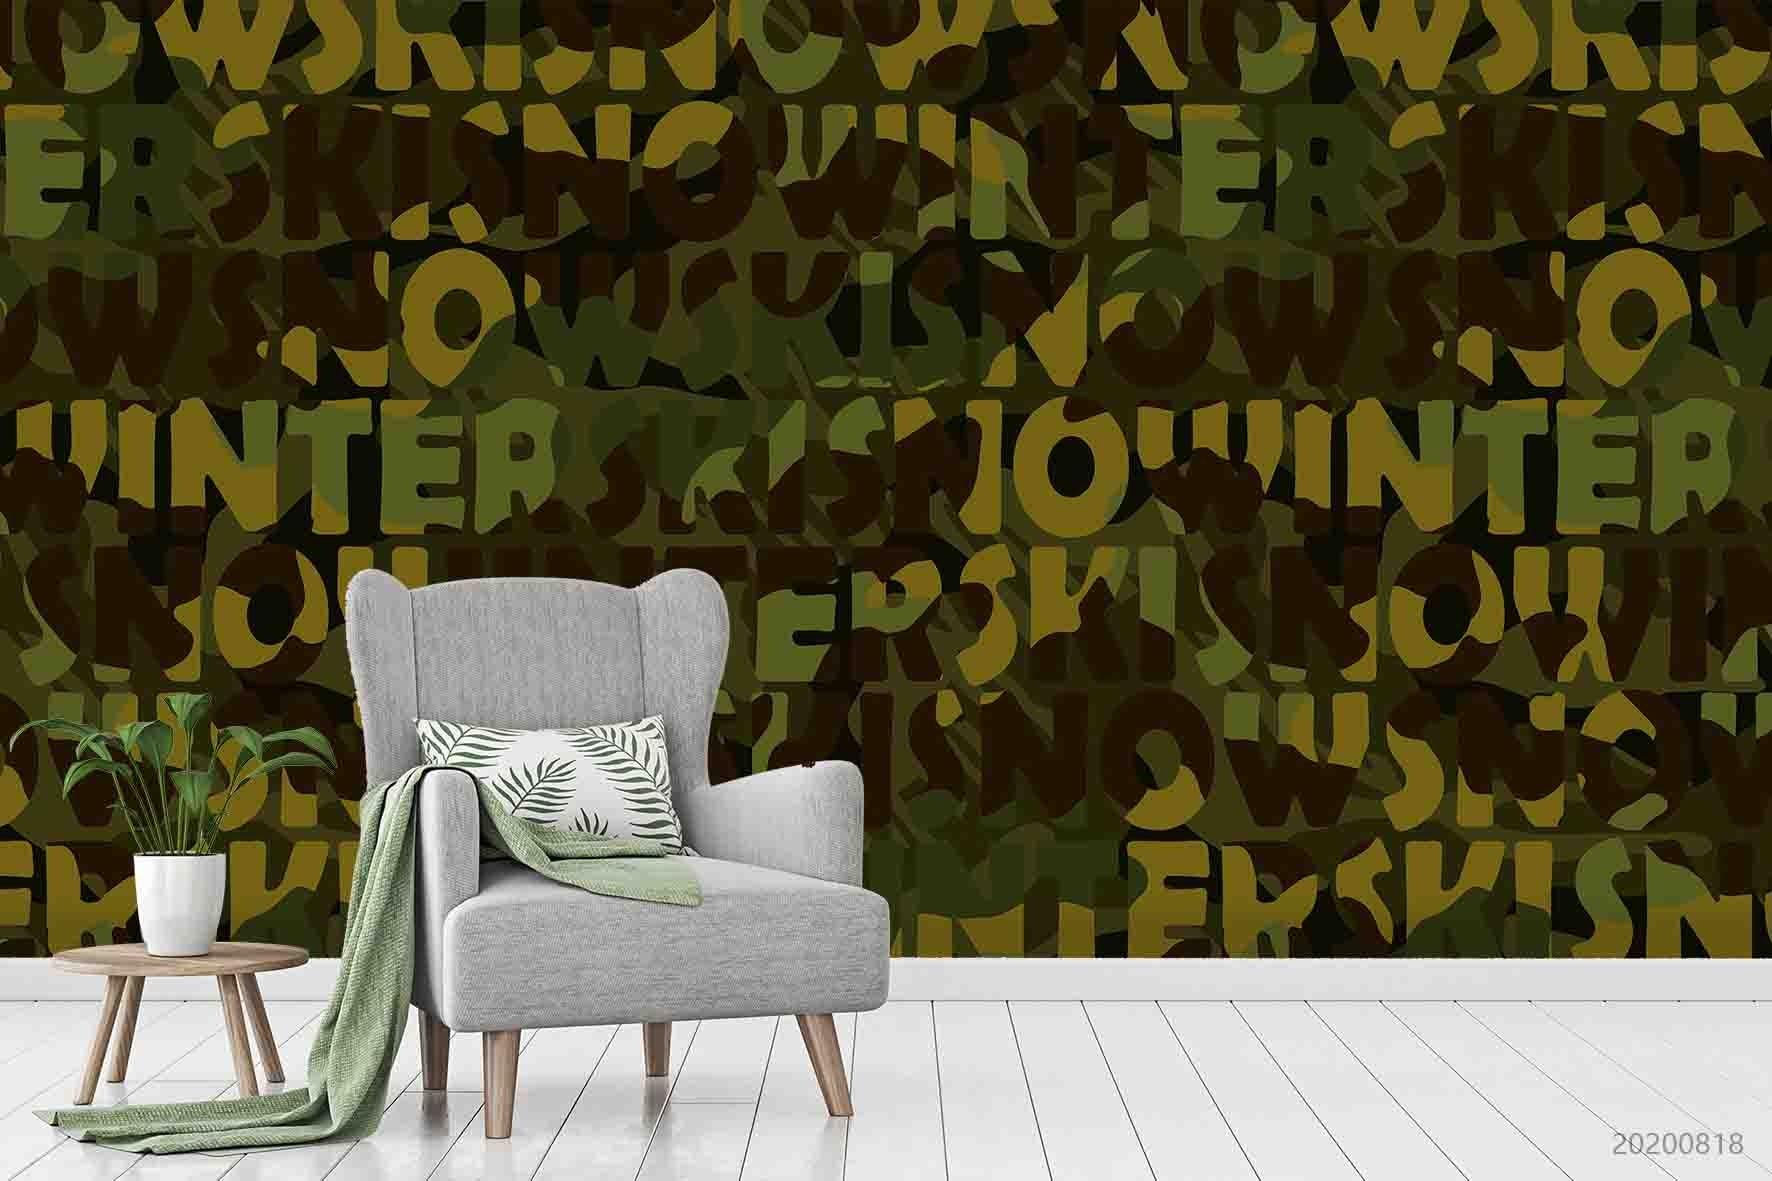 3D Vintage Camouflage Letter Pattern Wall Mural Wallpaper LXL 1151- Jess Art Decoration